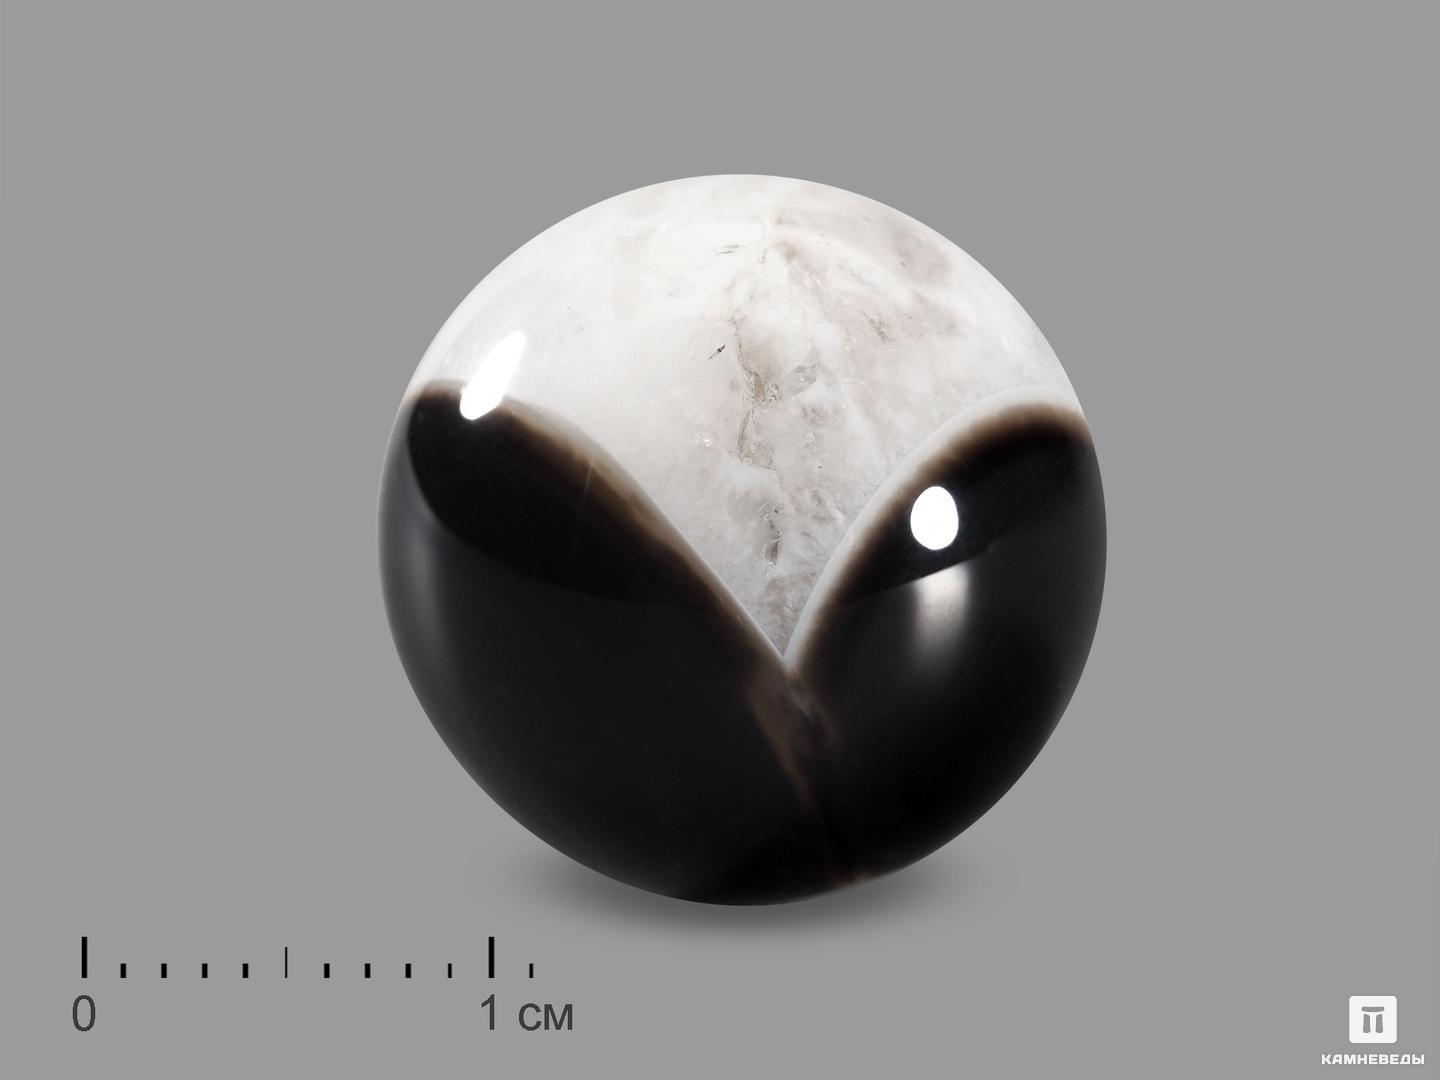 Шар из чёрного агата (чёрного оникса) с кварцем, 19-20 мм, 19510, фото 1